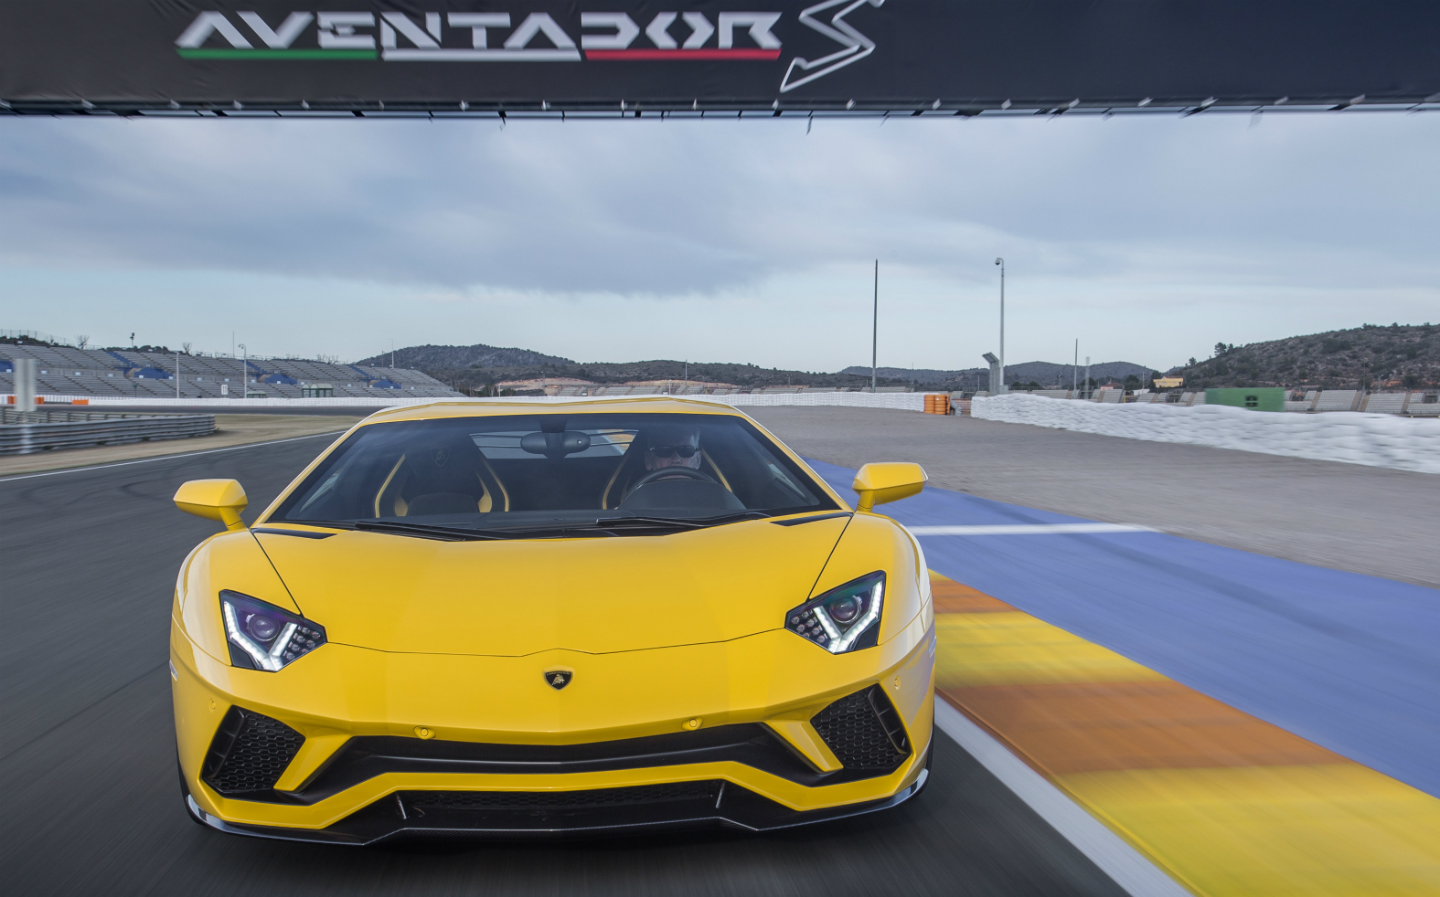 First Drive review: 2017 Lamborghini Aventador S